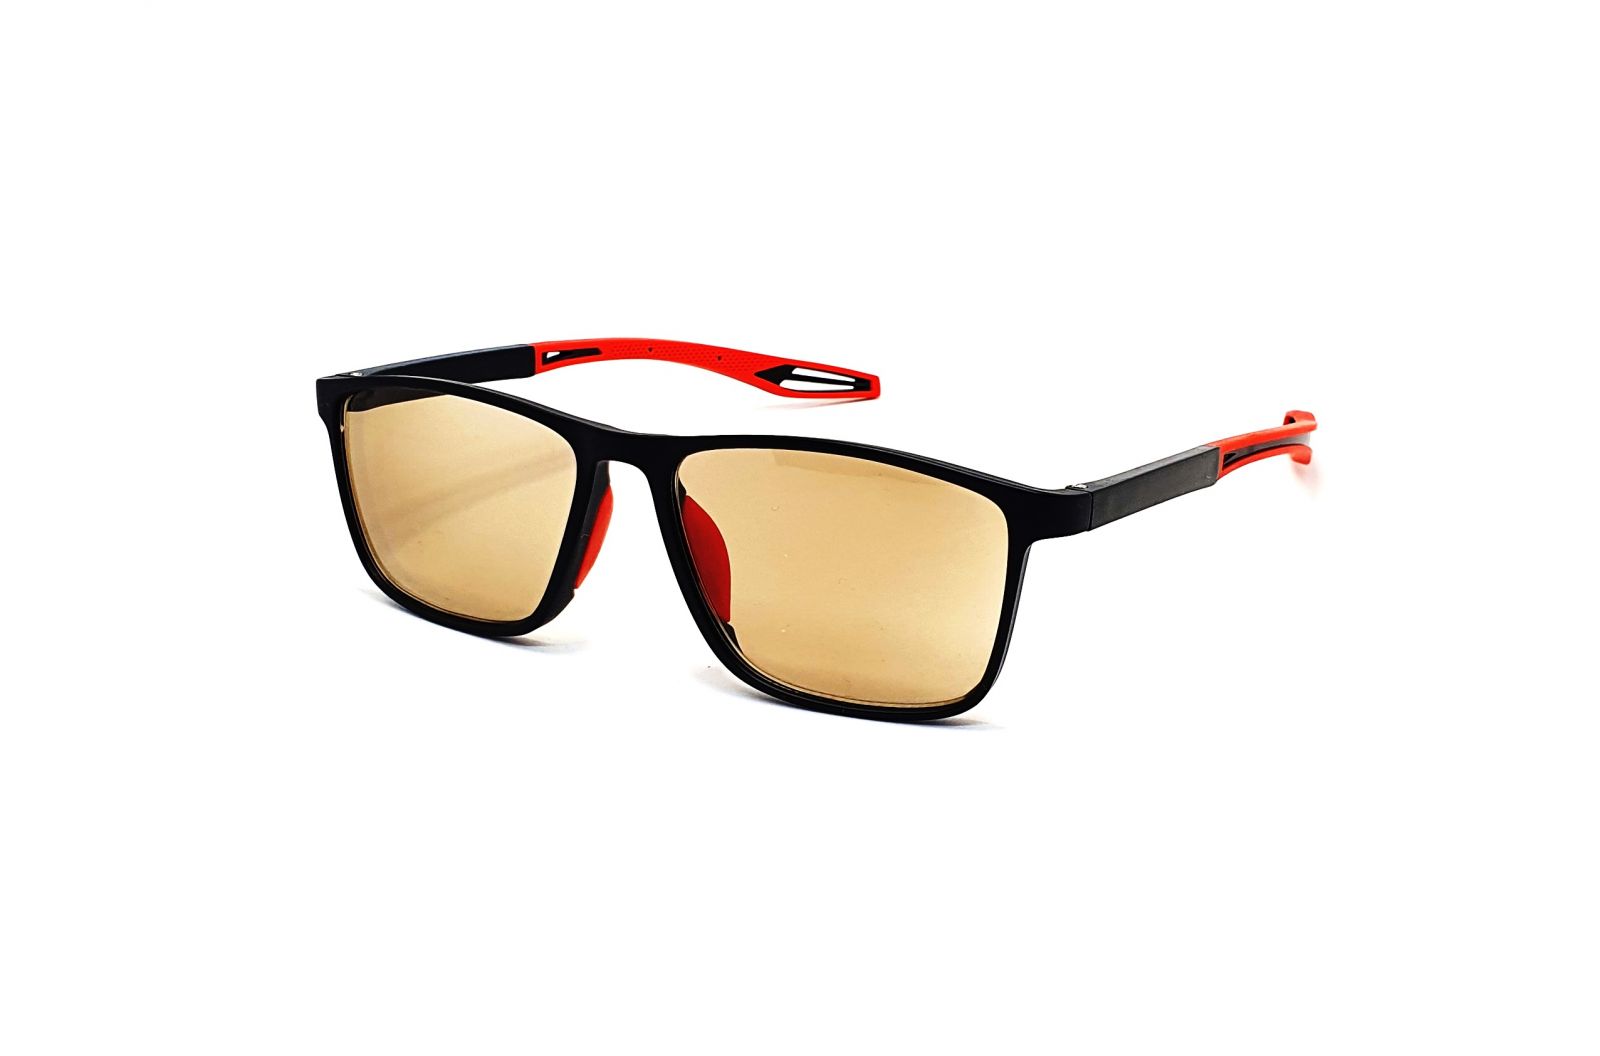 Samozabarvovací dioptrické brýle F04B / -1,50 black/red clear-brown